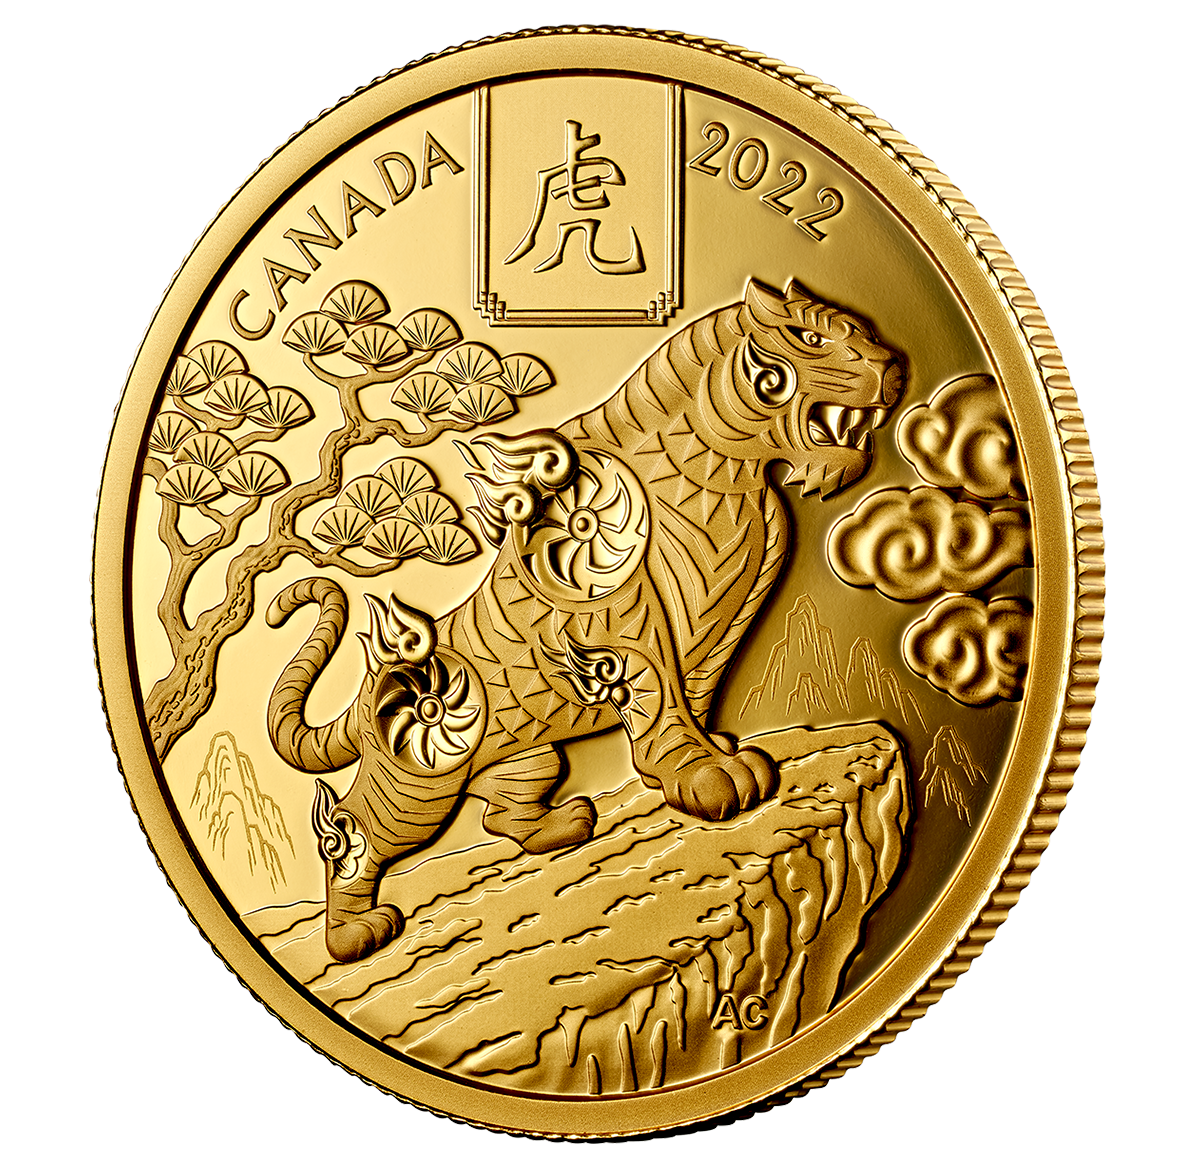 Our first $100 gold lunar coin